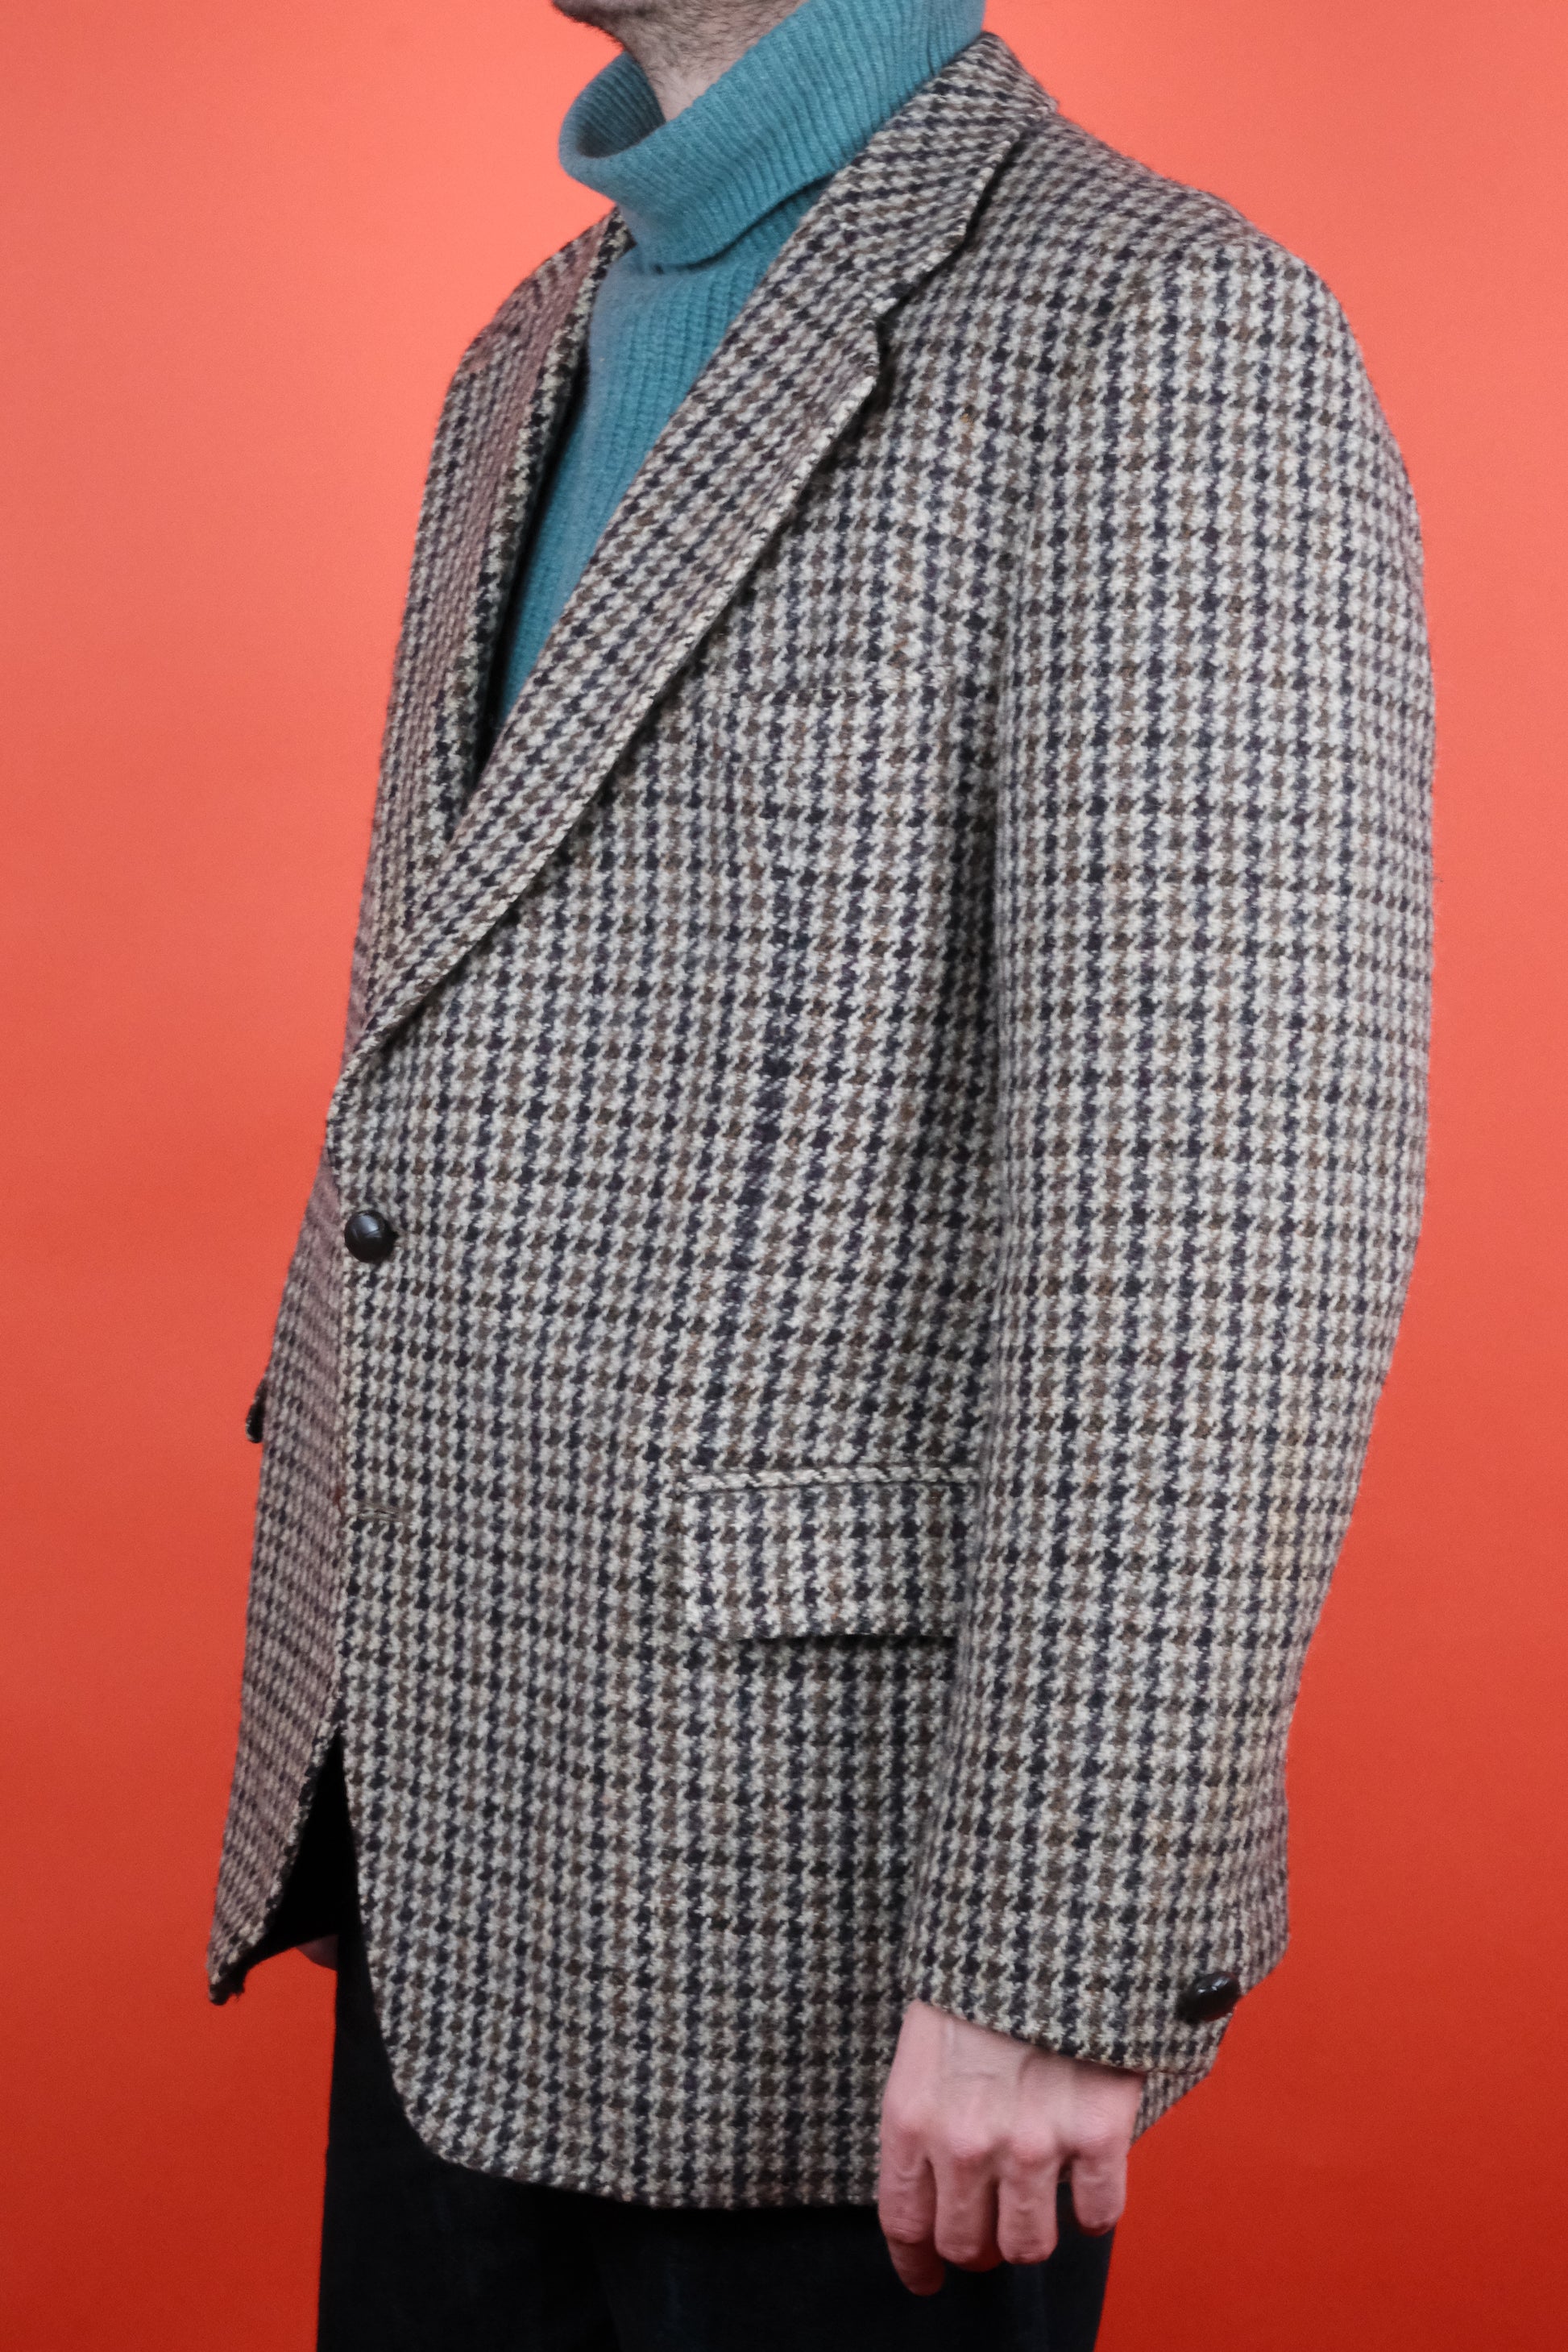 Senator Harris Tweed Houndstooth Suit Jacket 'L' - vintage clothing clochard92.com